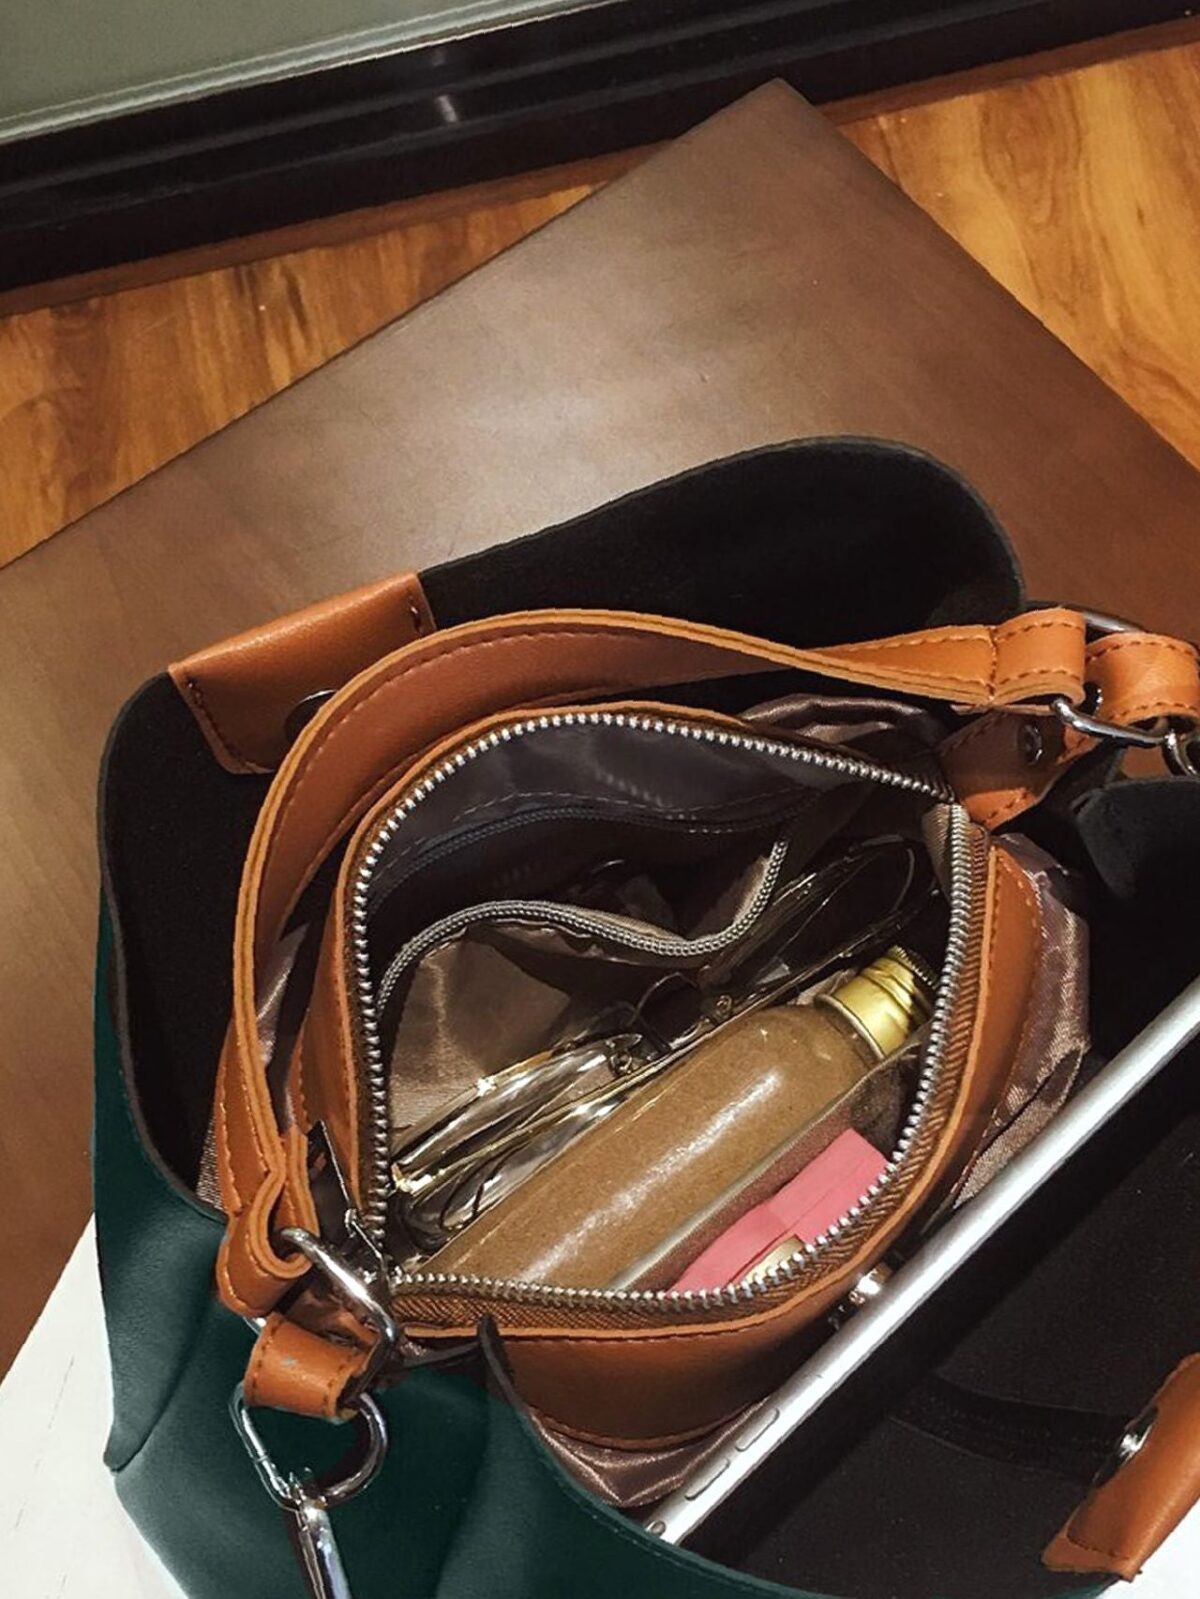 Strathberry Lana Midi Bucket Bag Review - Fashion Should Be Fun